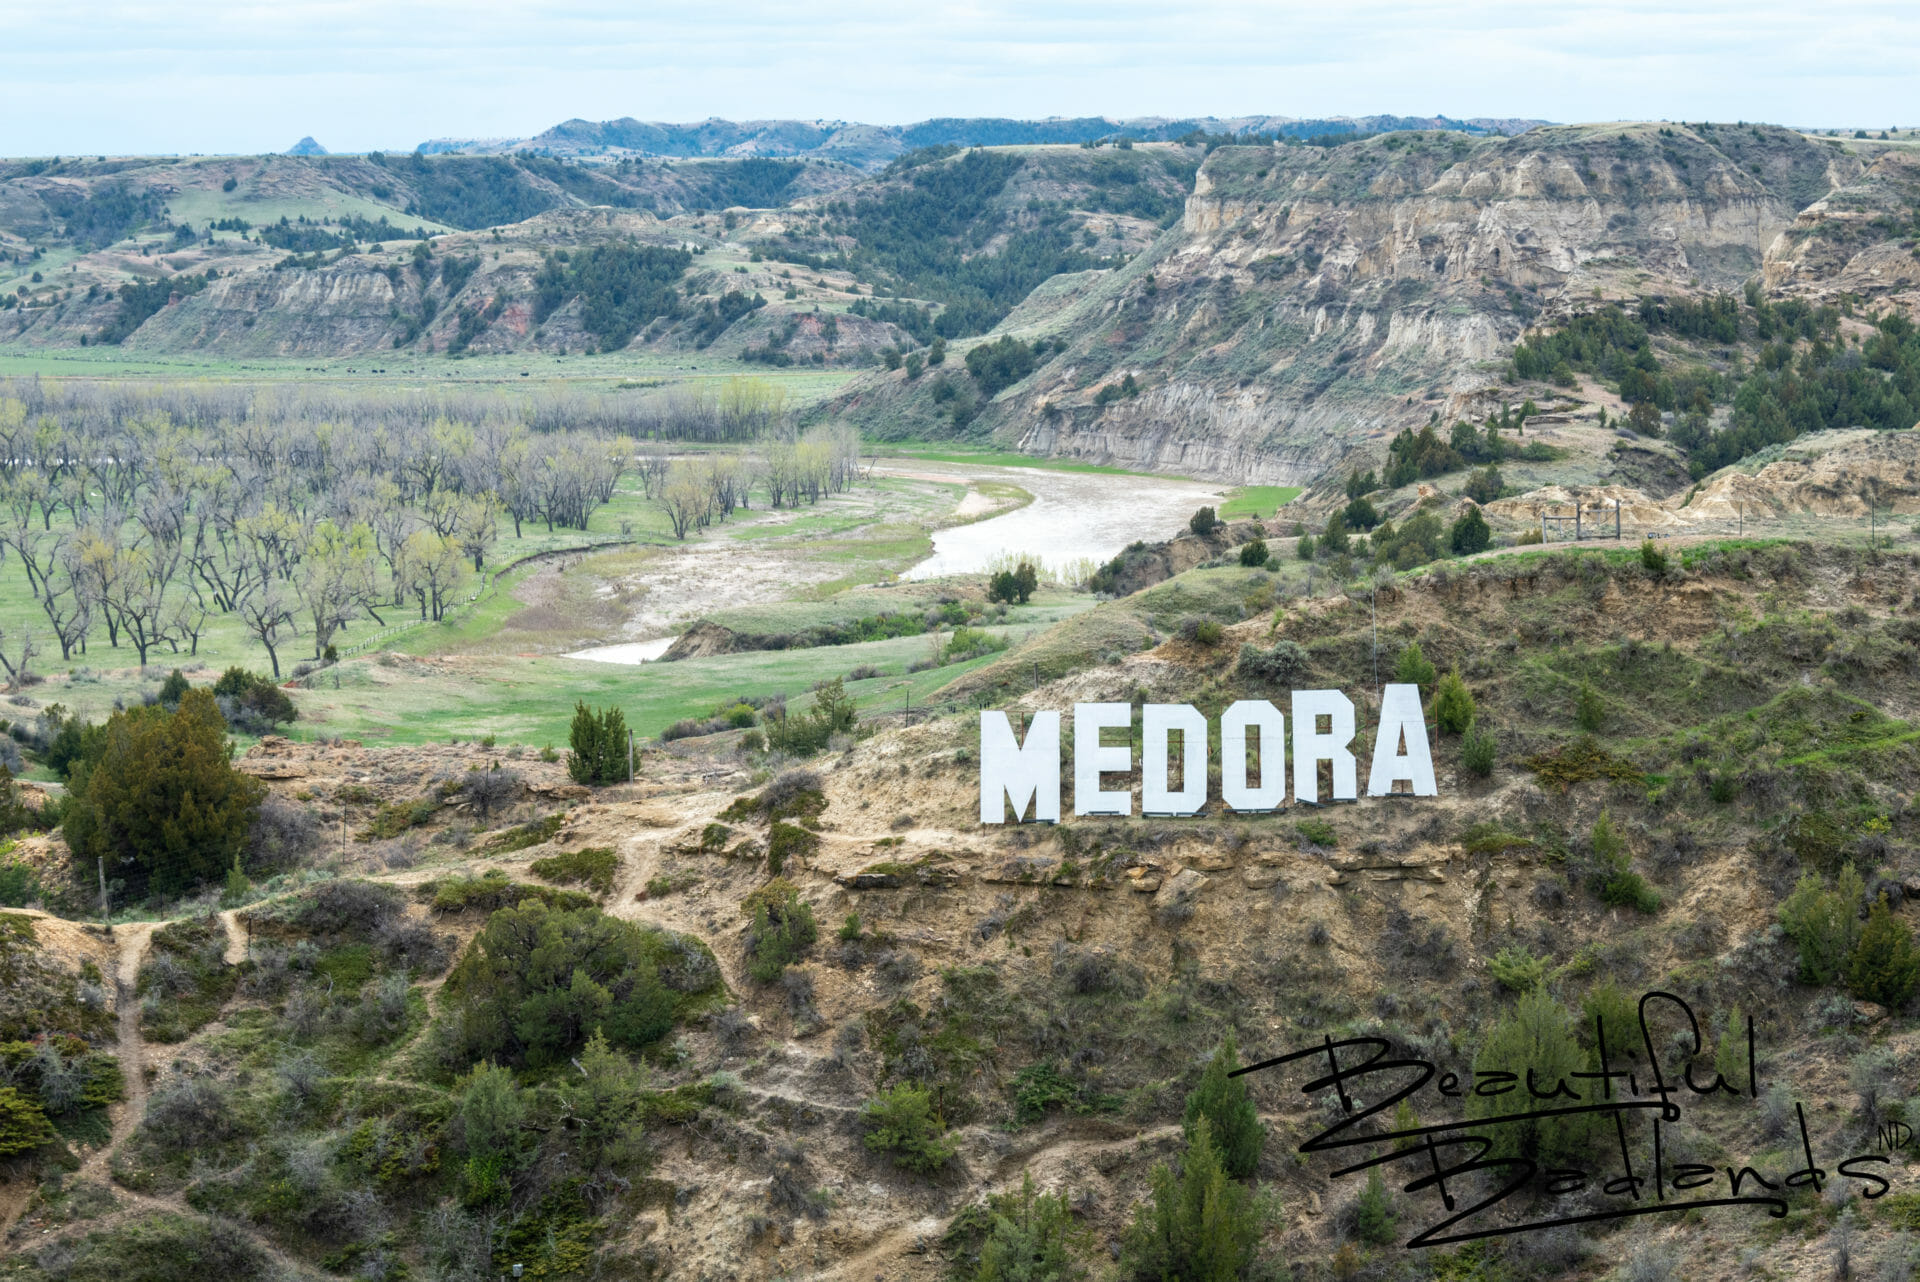 5 destinations you'll love -- Medora North Dakota and the Badlands